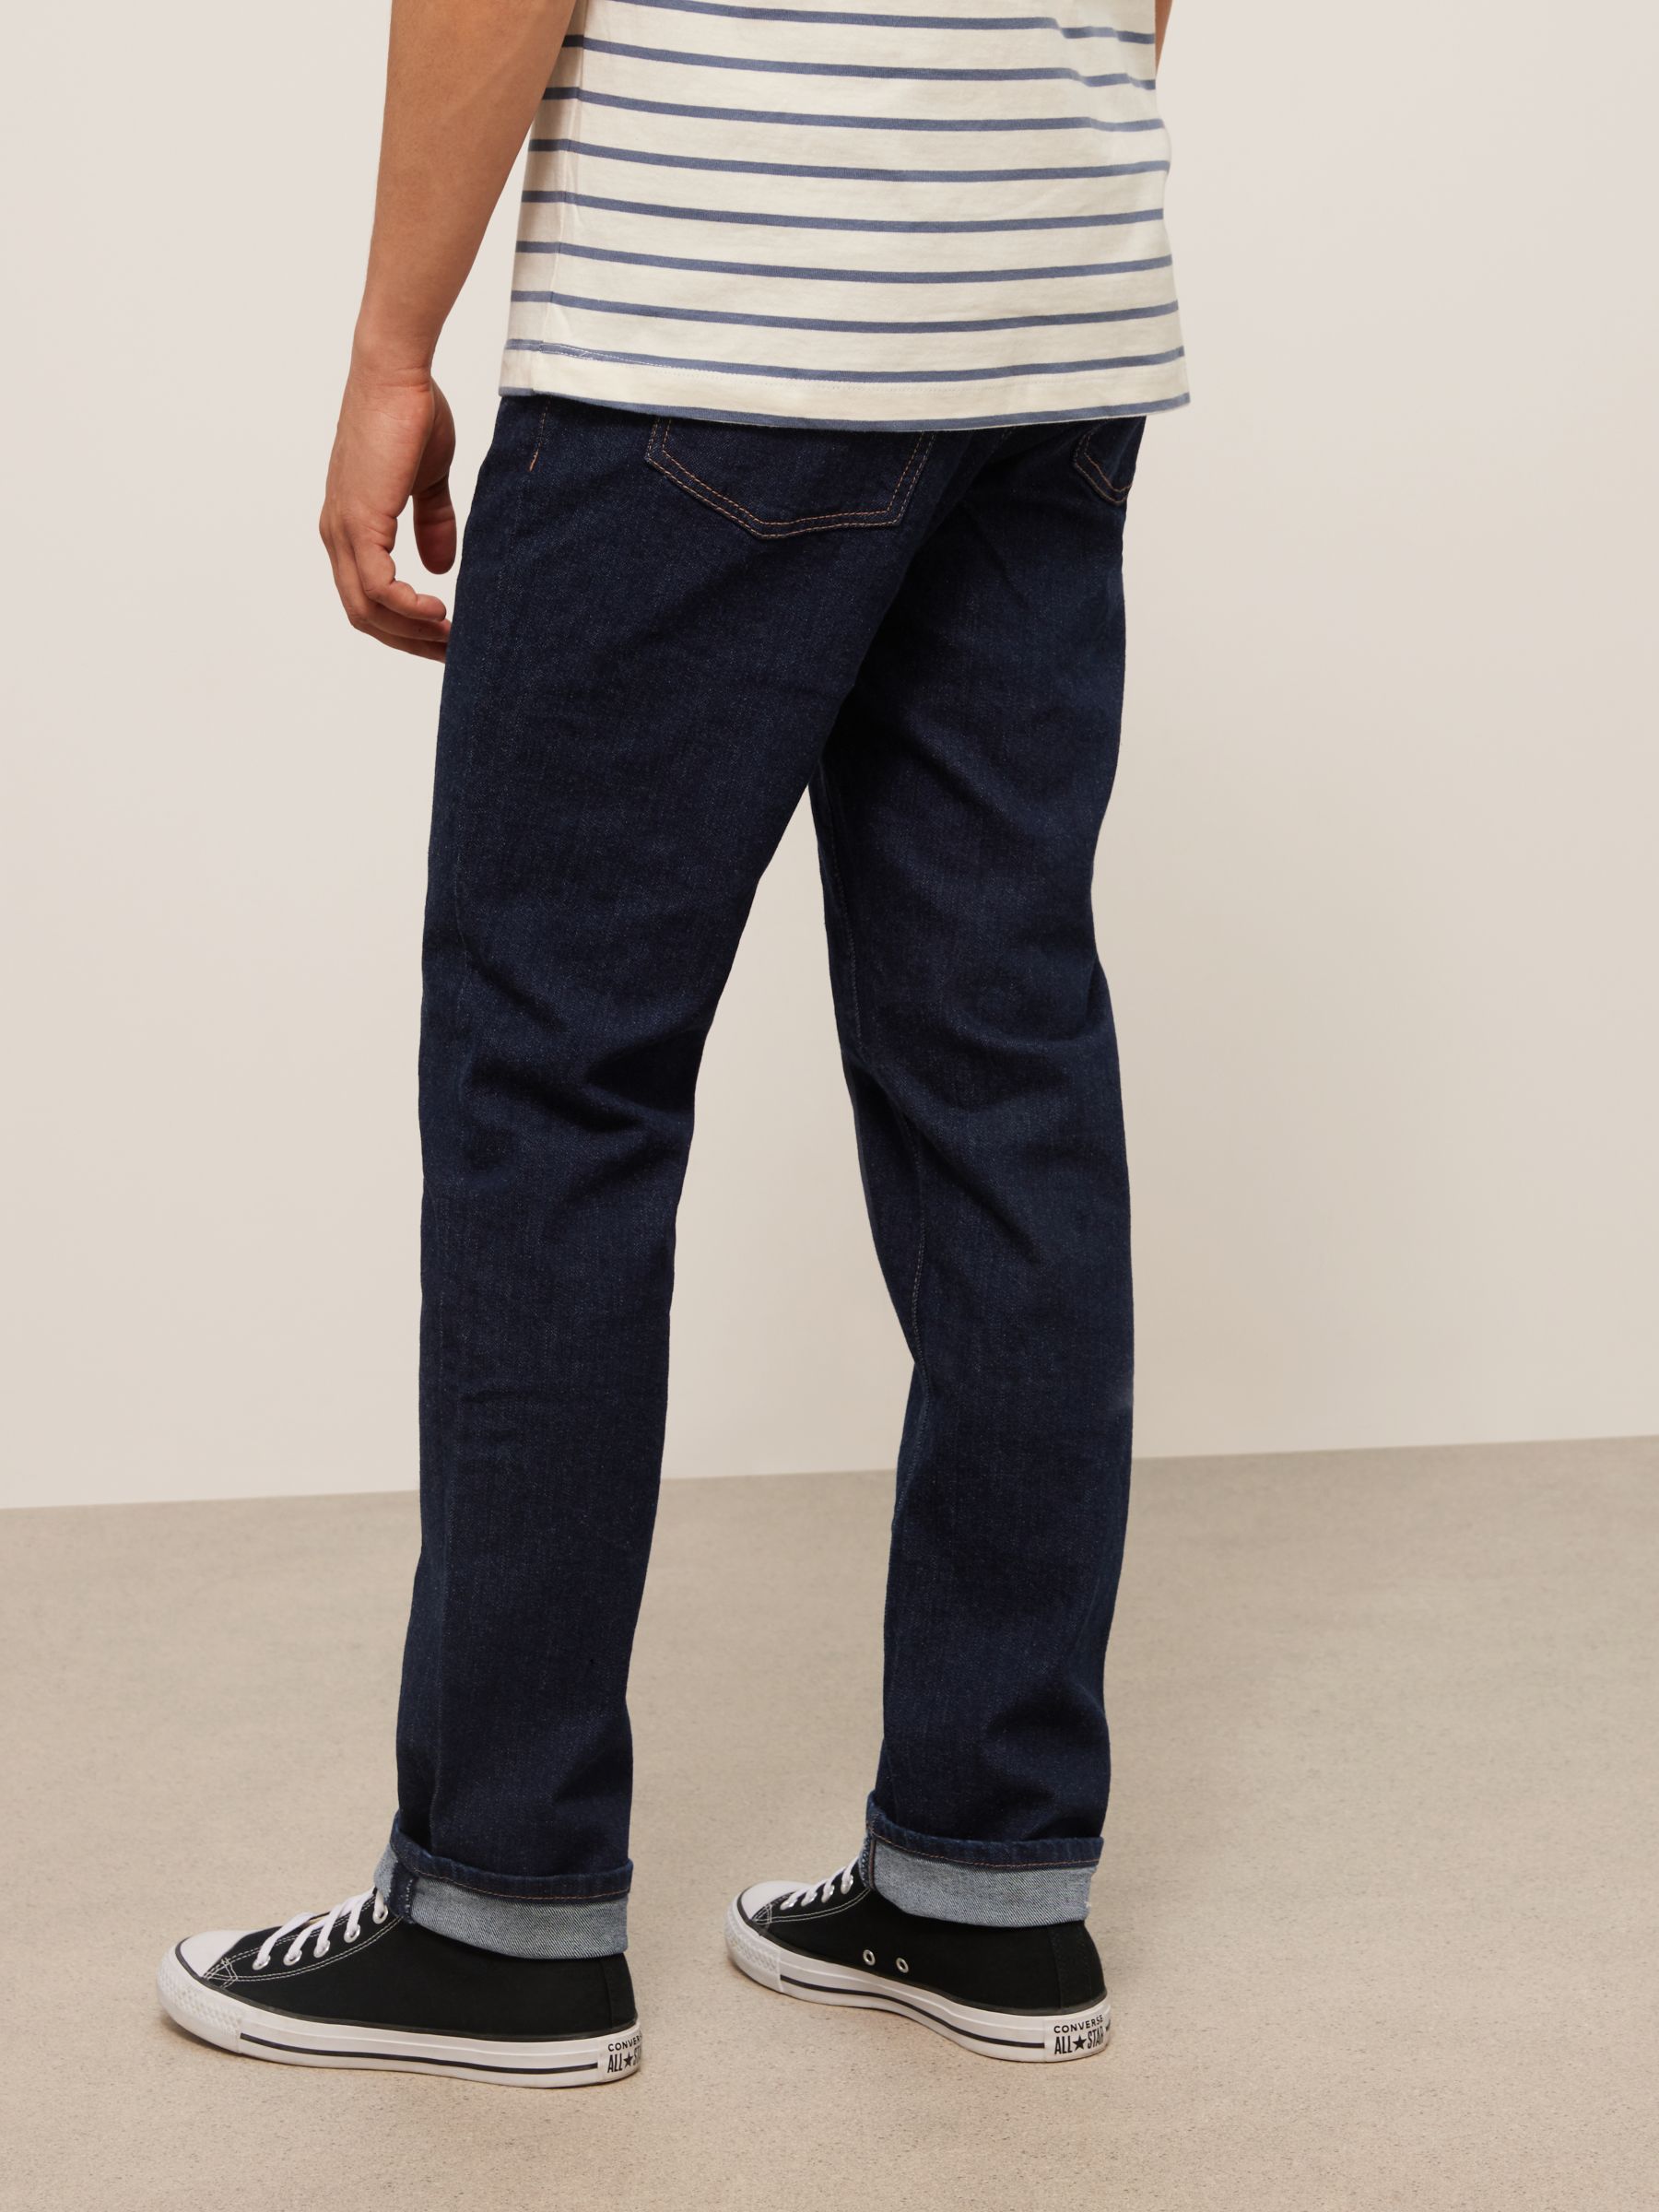 John Lewis Slim Fit Denim Jeans, Blue, 32R